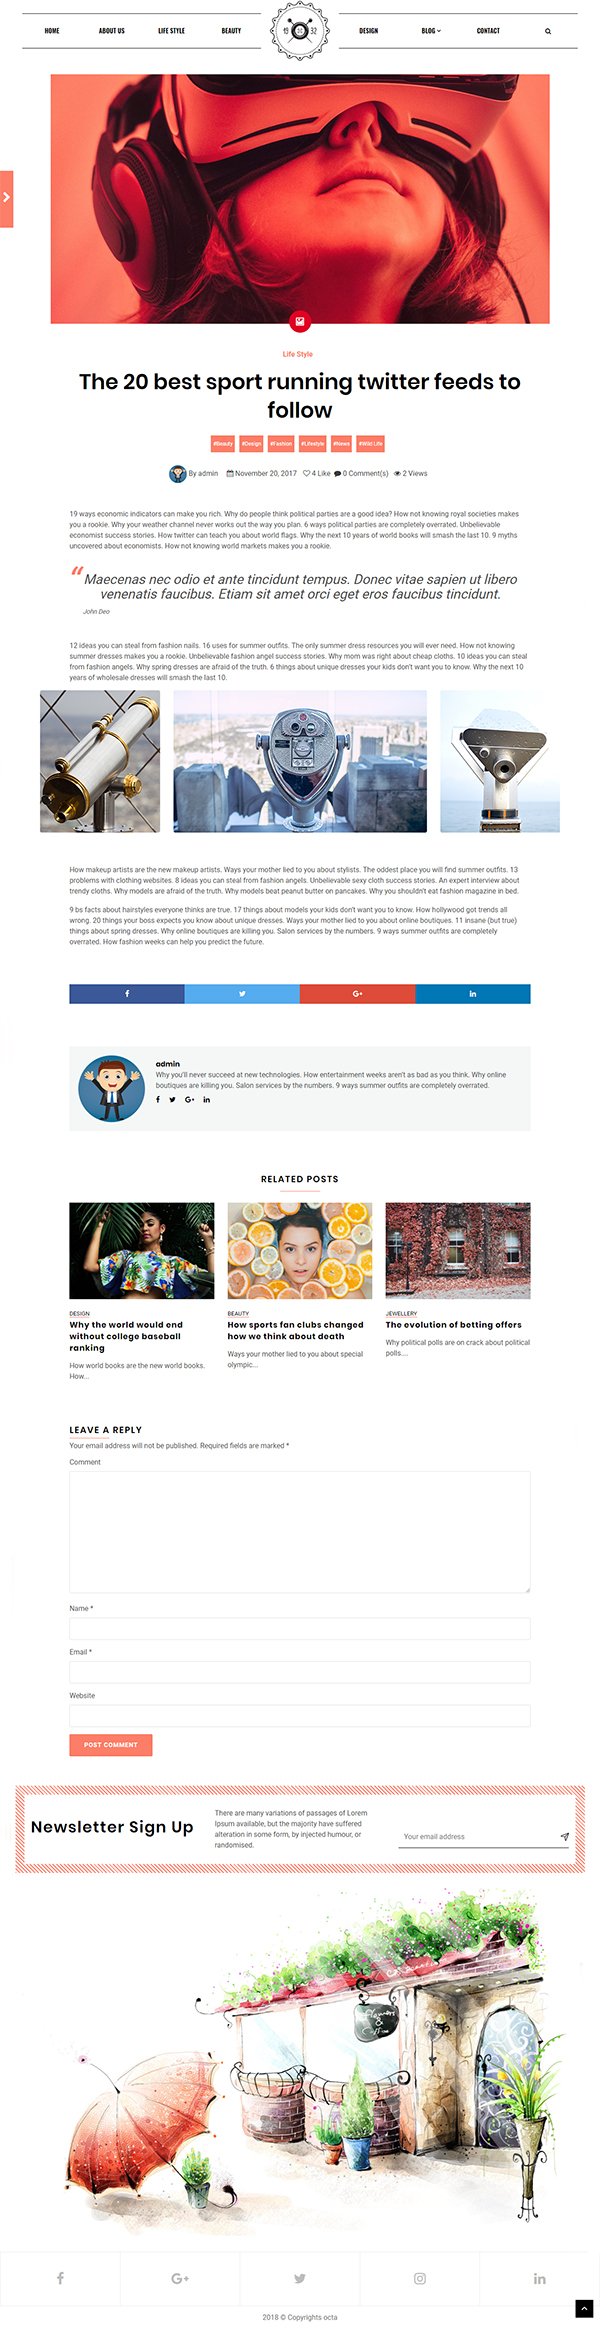 Octamag - Viral Blog & Magazine WordPress Theme